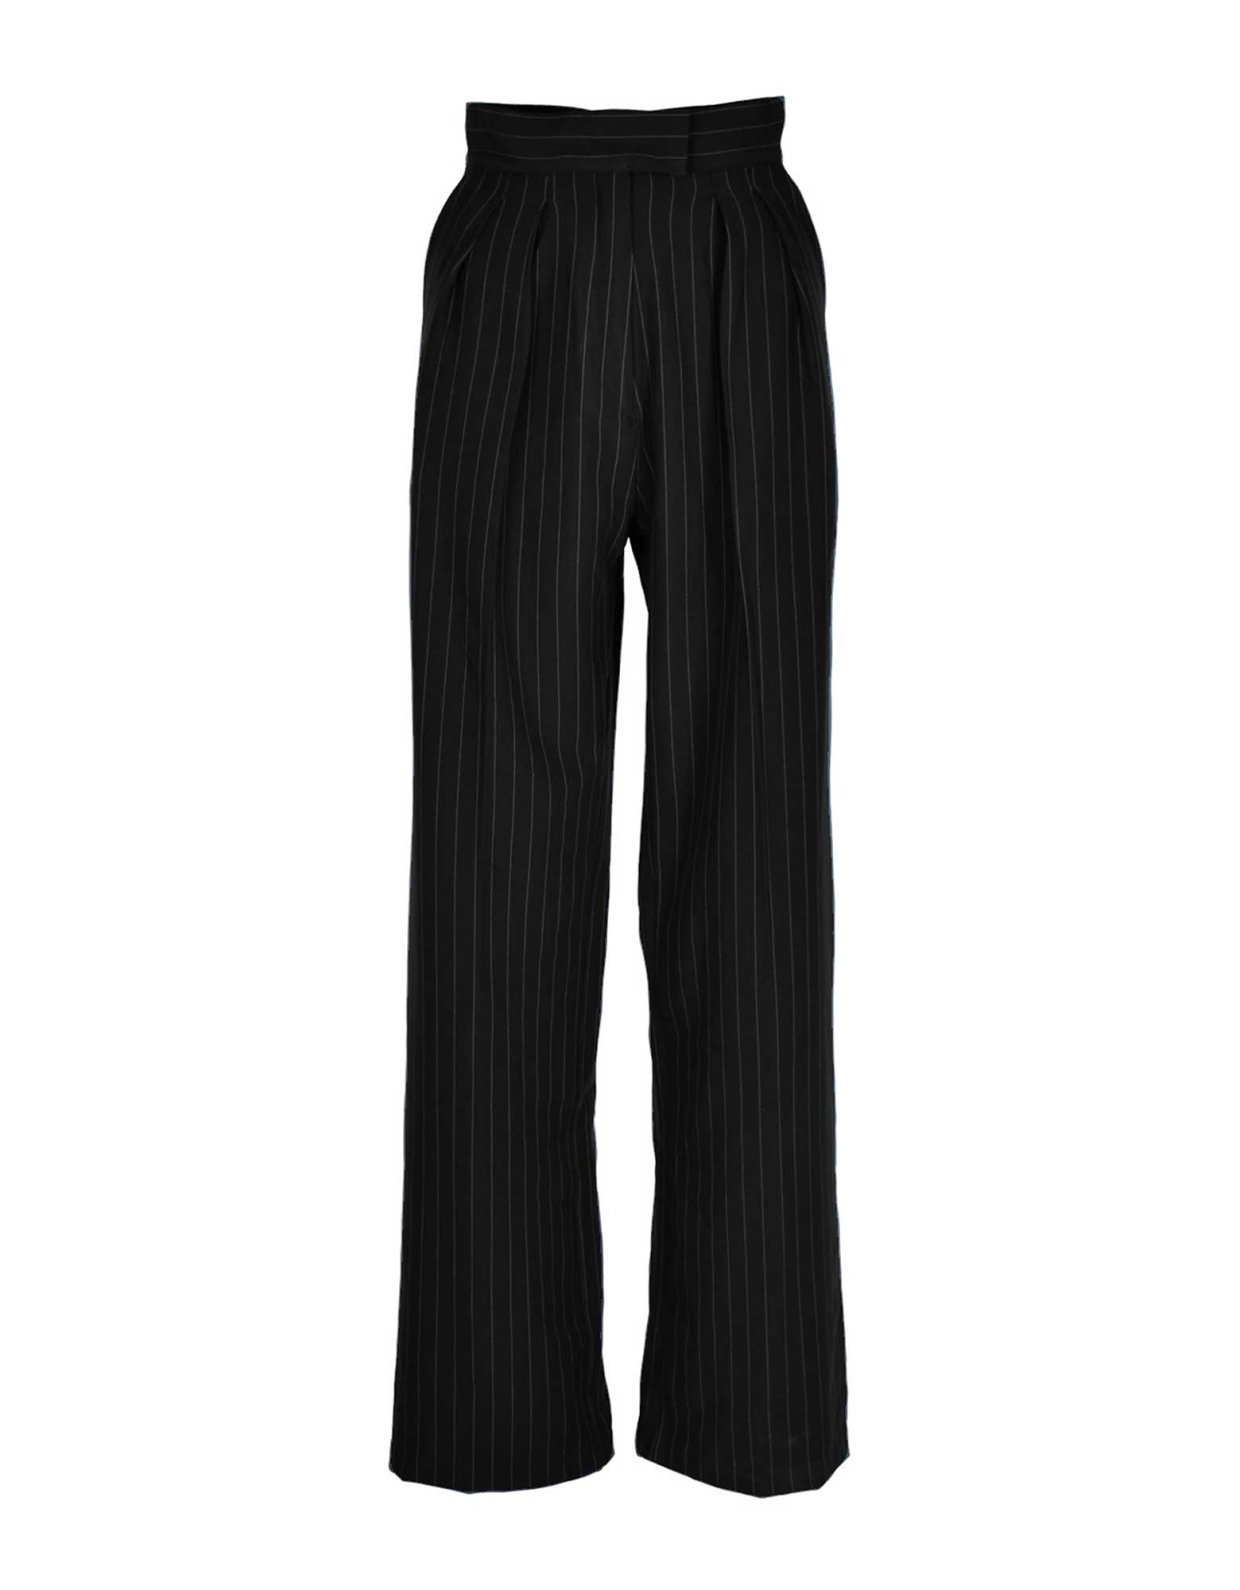 Studio 83 Stripes flare pants black